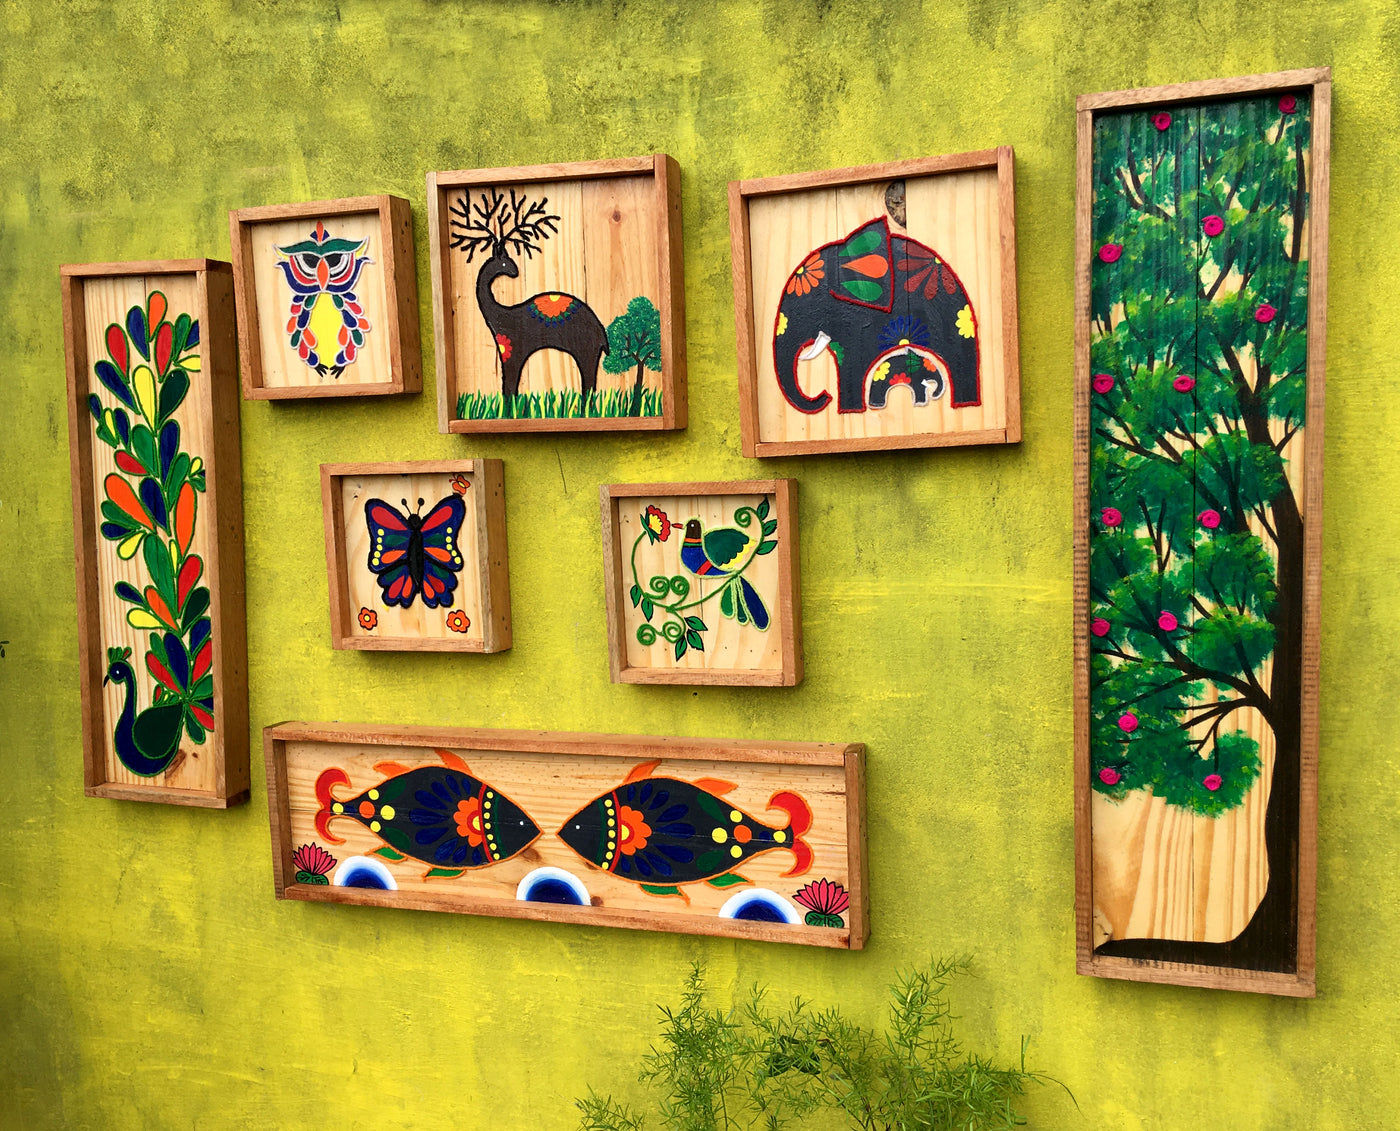 Chinhhari arts wooden hand painted wall decor tiles - WWD001 -  Chinhhari Arts